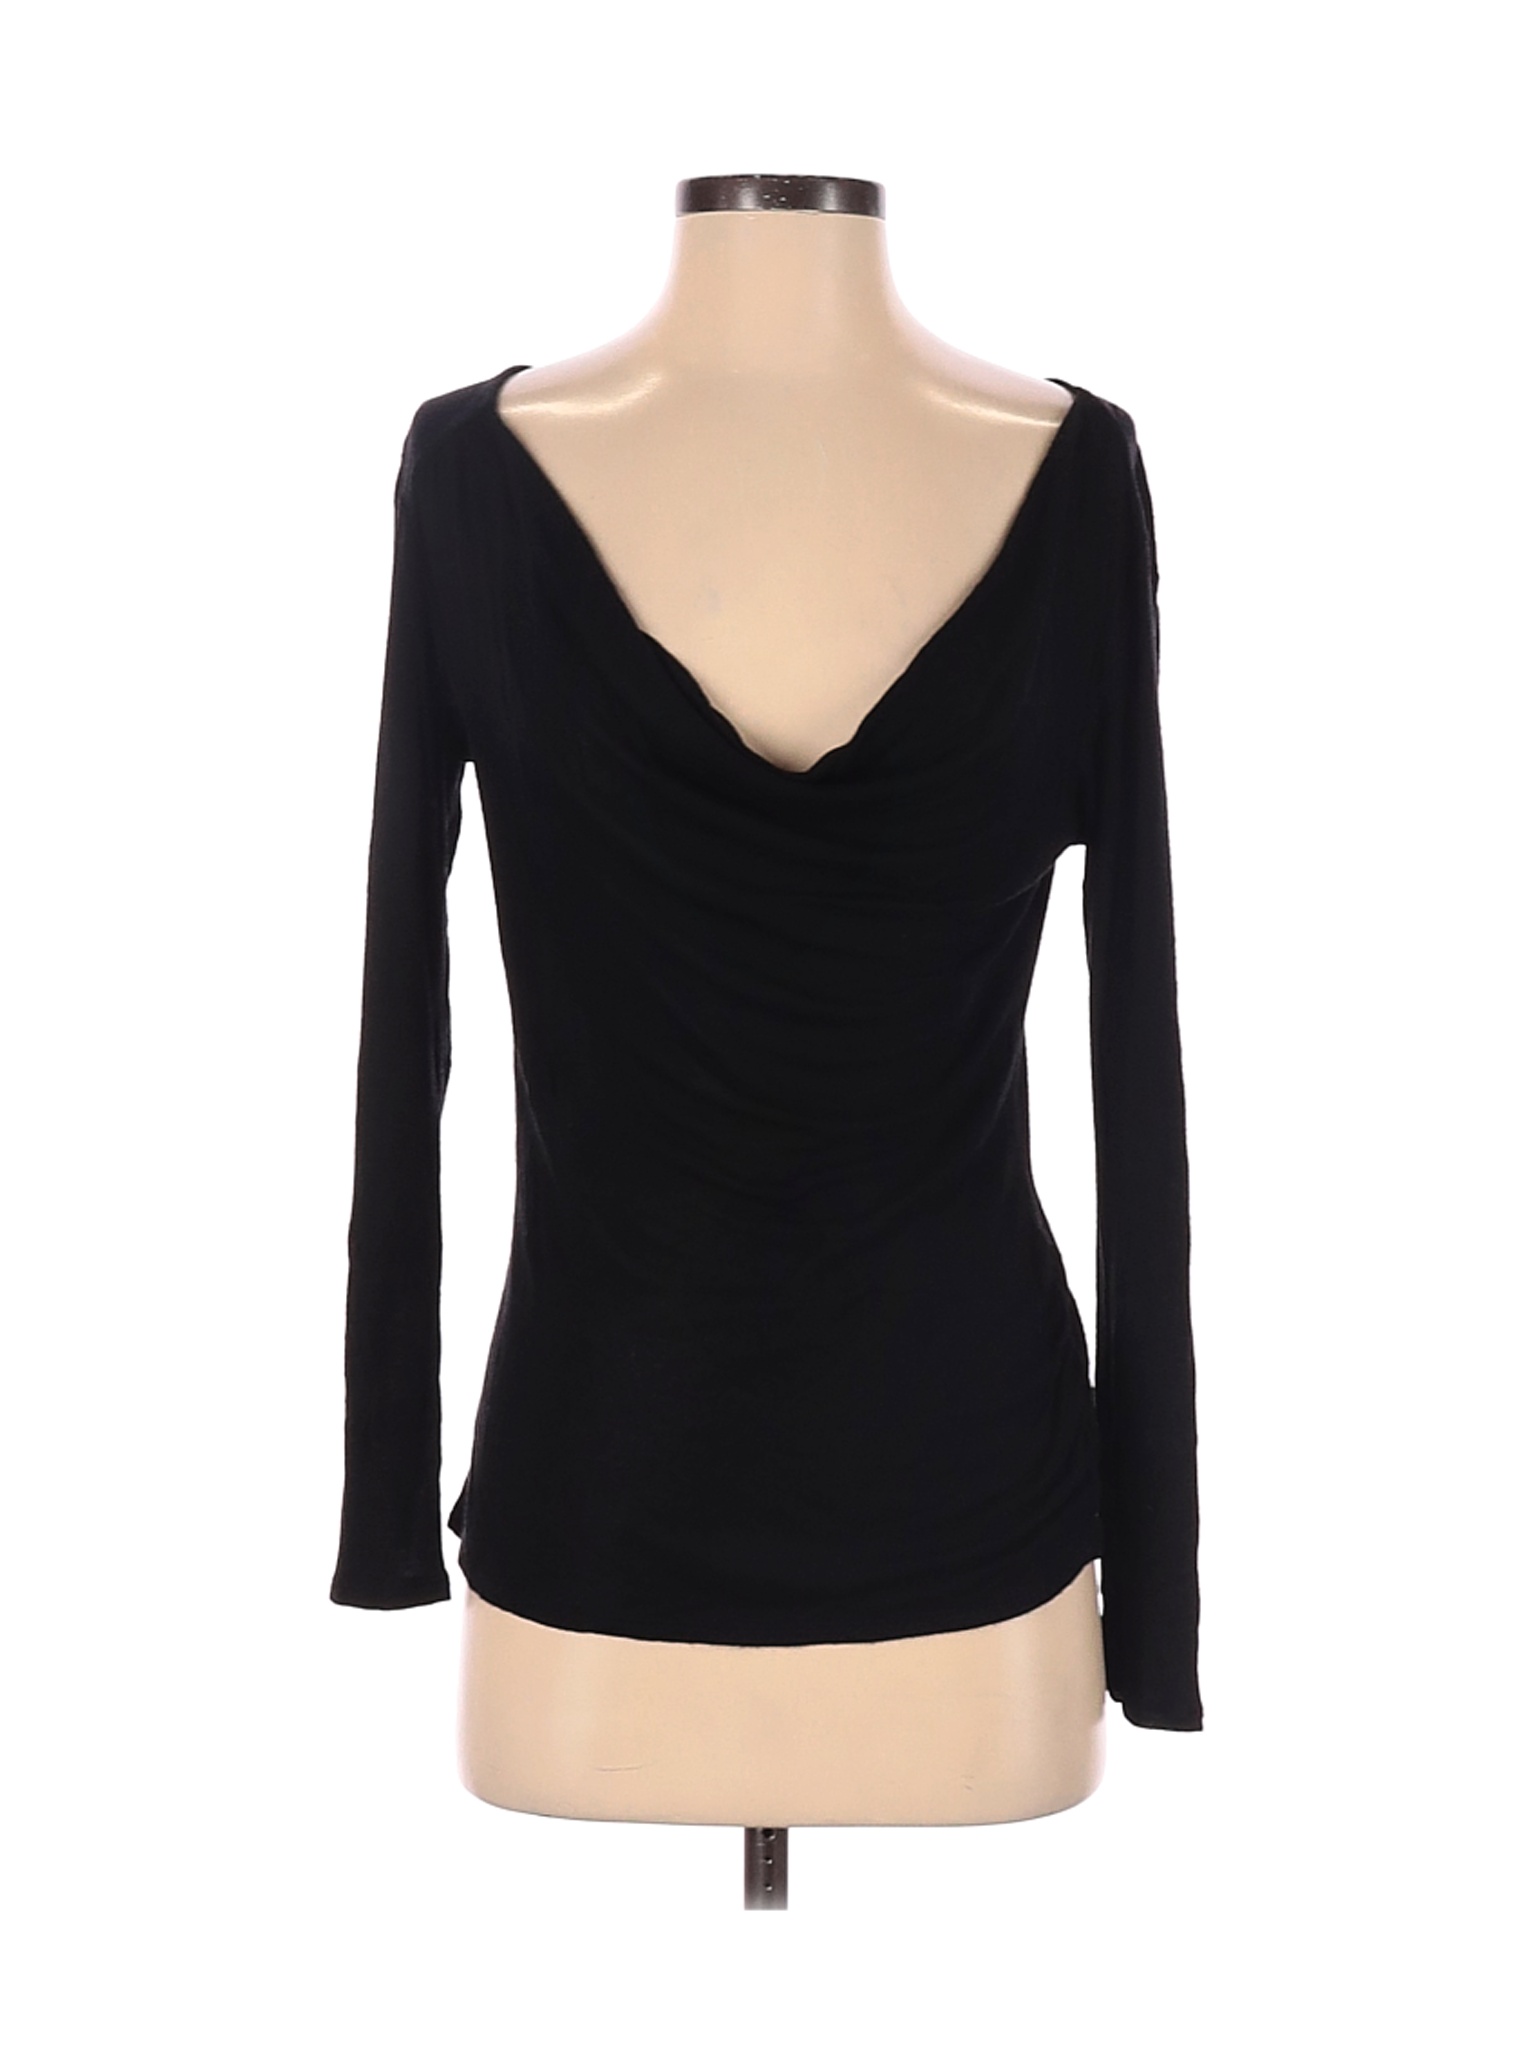 Victoria's Secret Women Black Long Sleeve Top S | eBay